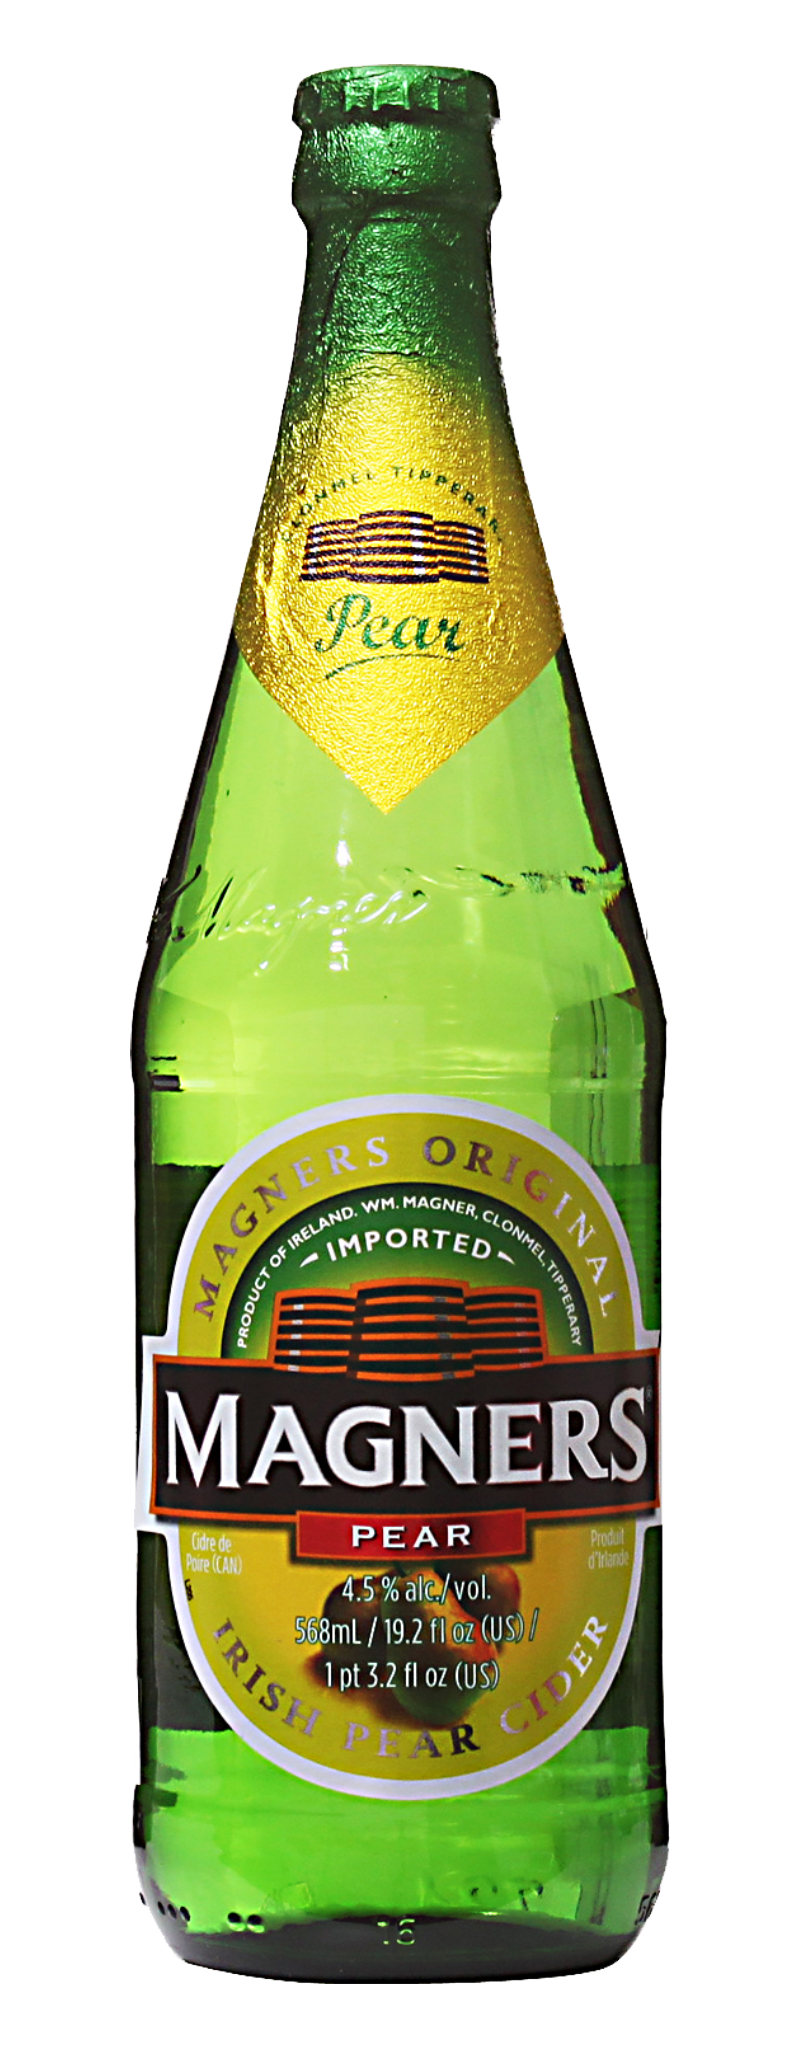 Magner Cider Pear (thùng 24 chai)  - 330ml